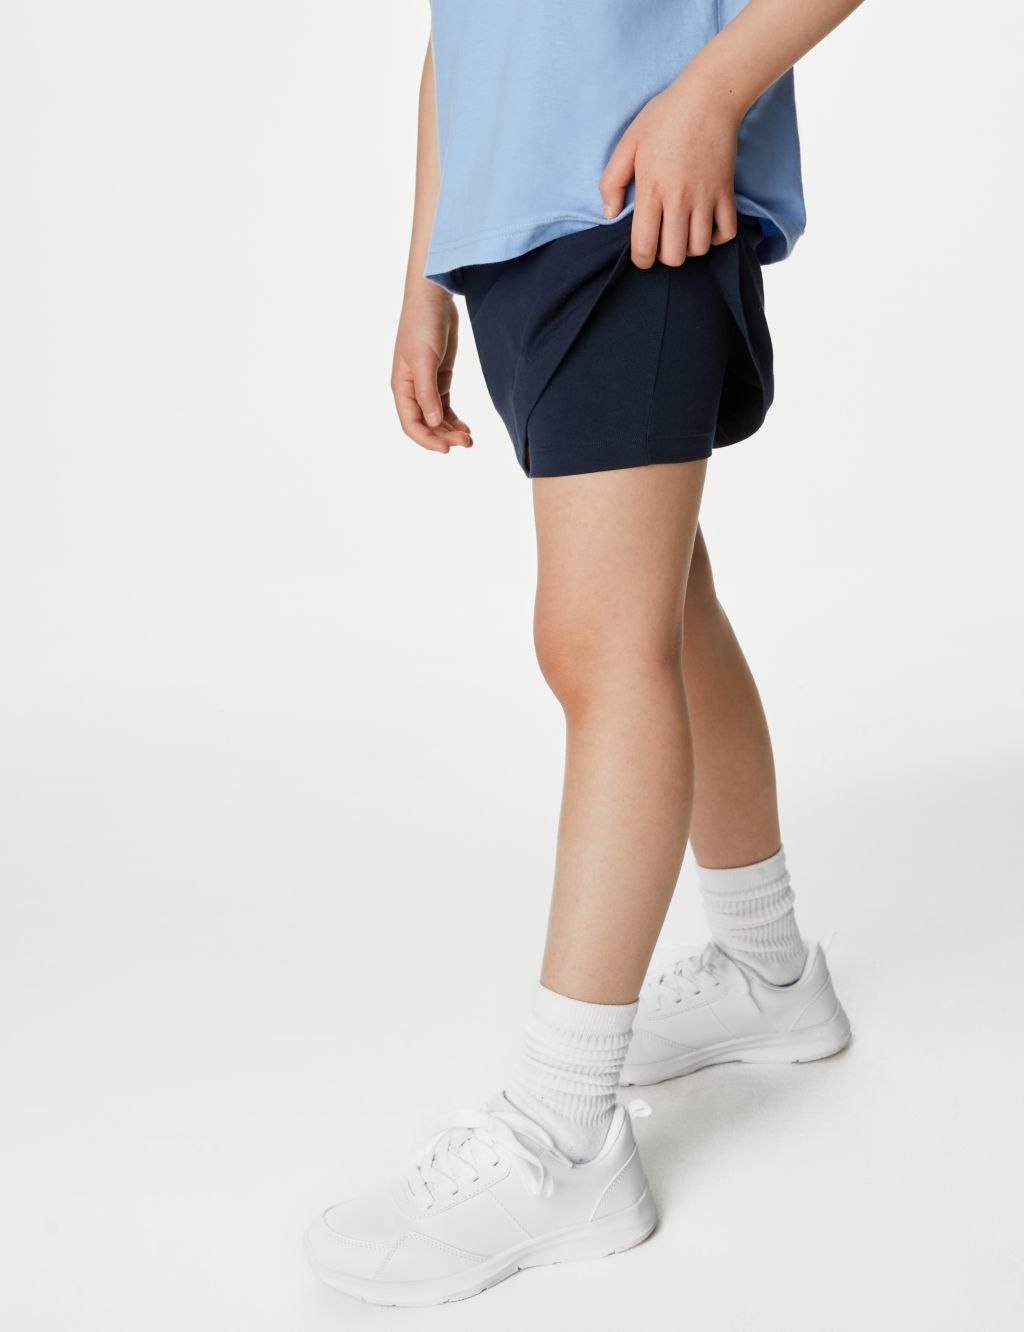 Girls' Cotton with Stretch Sports School Skorts (2-16 Yrs) image 4